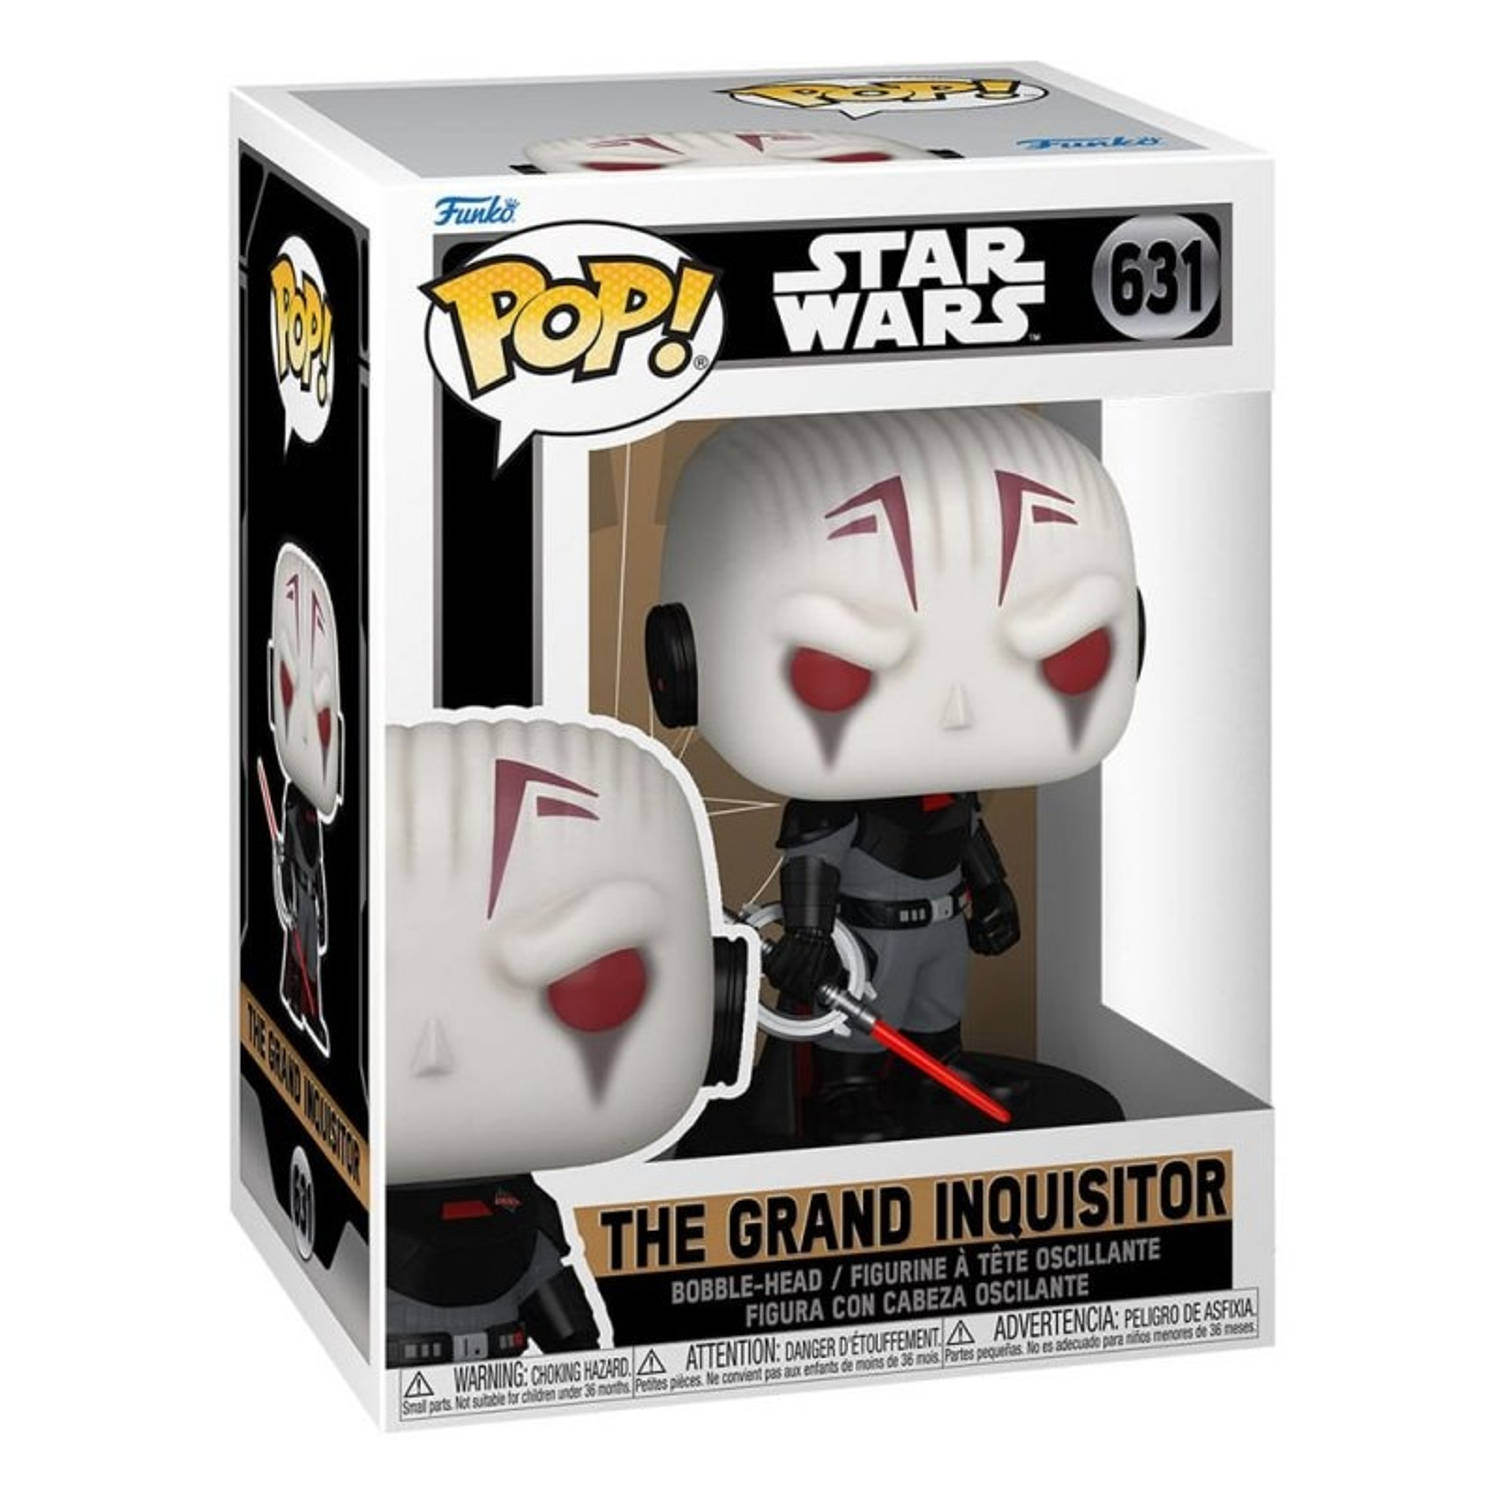 Pop Star Wars: The Grand Inquisitor Funko Pop #631